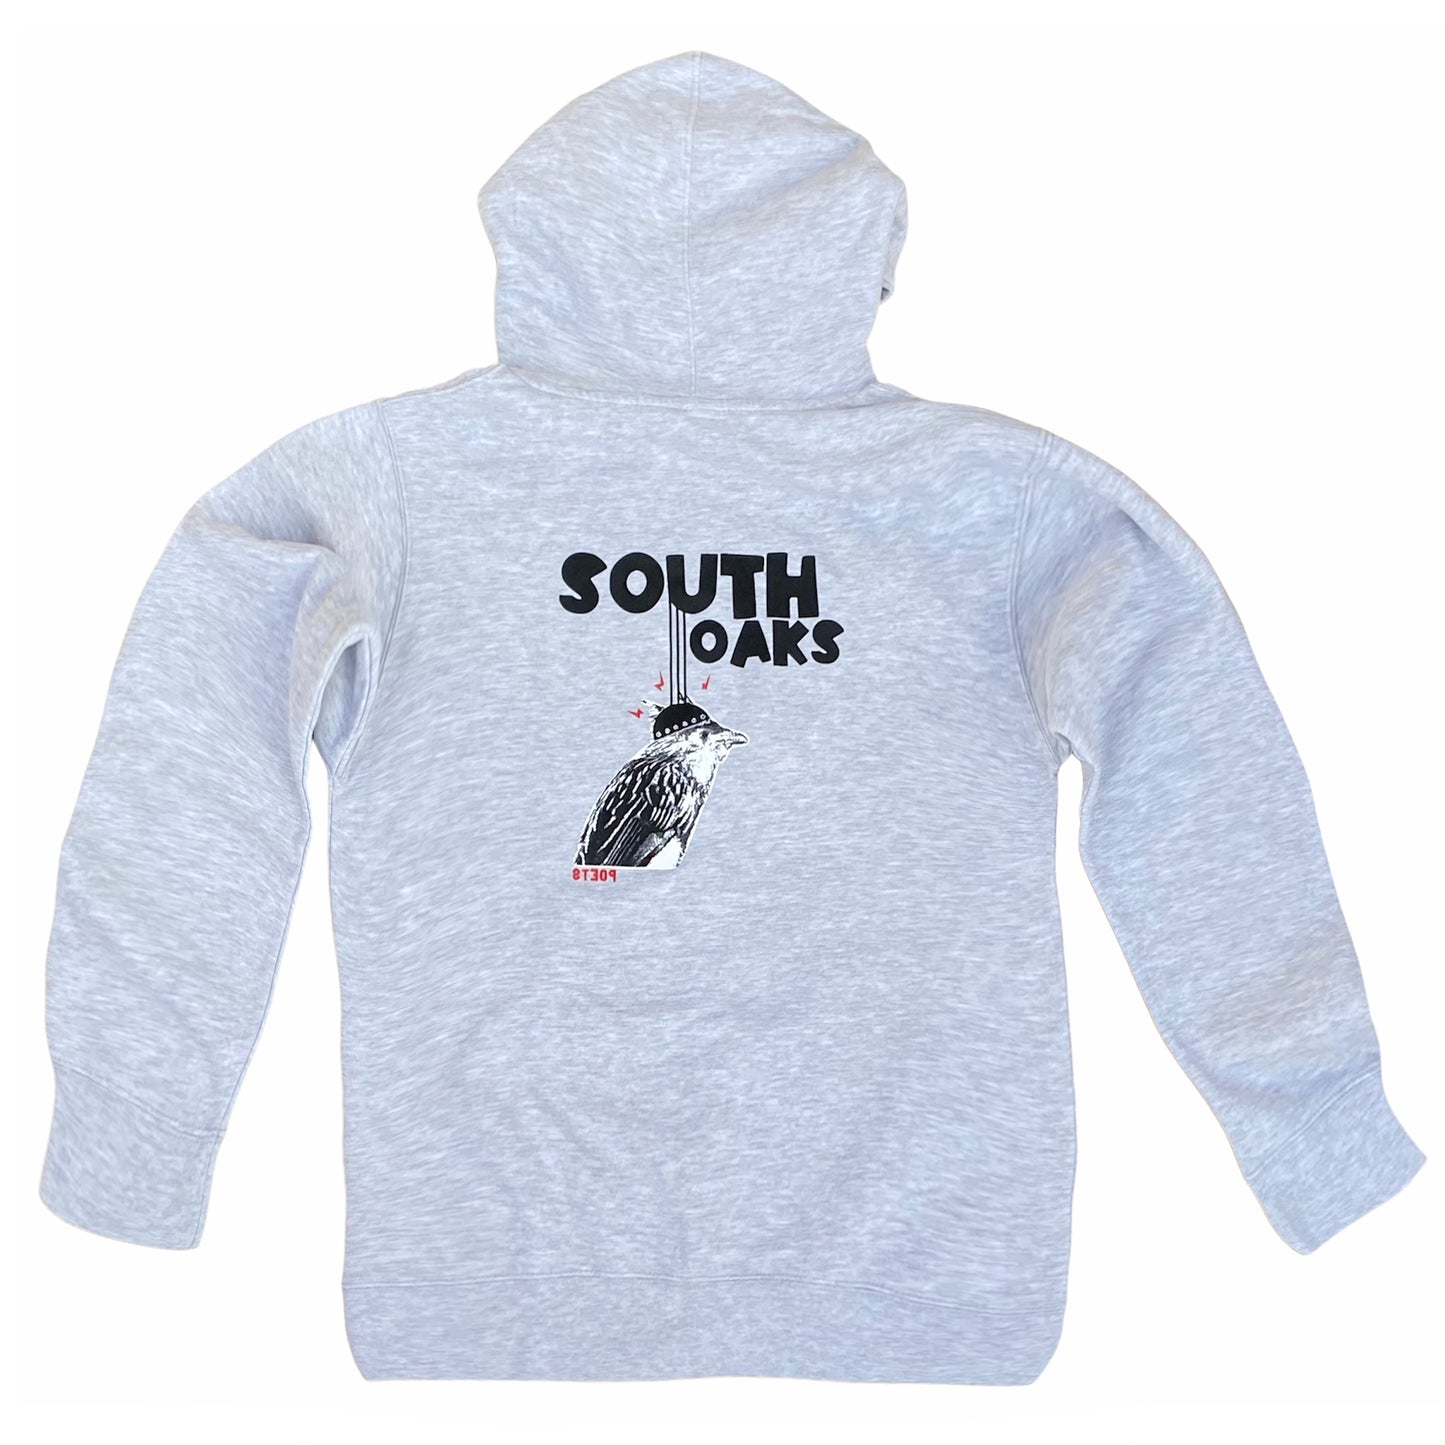 Cuckoo Hooded Sweatshirt Heather Grey (size options listed)